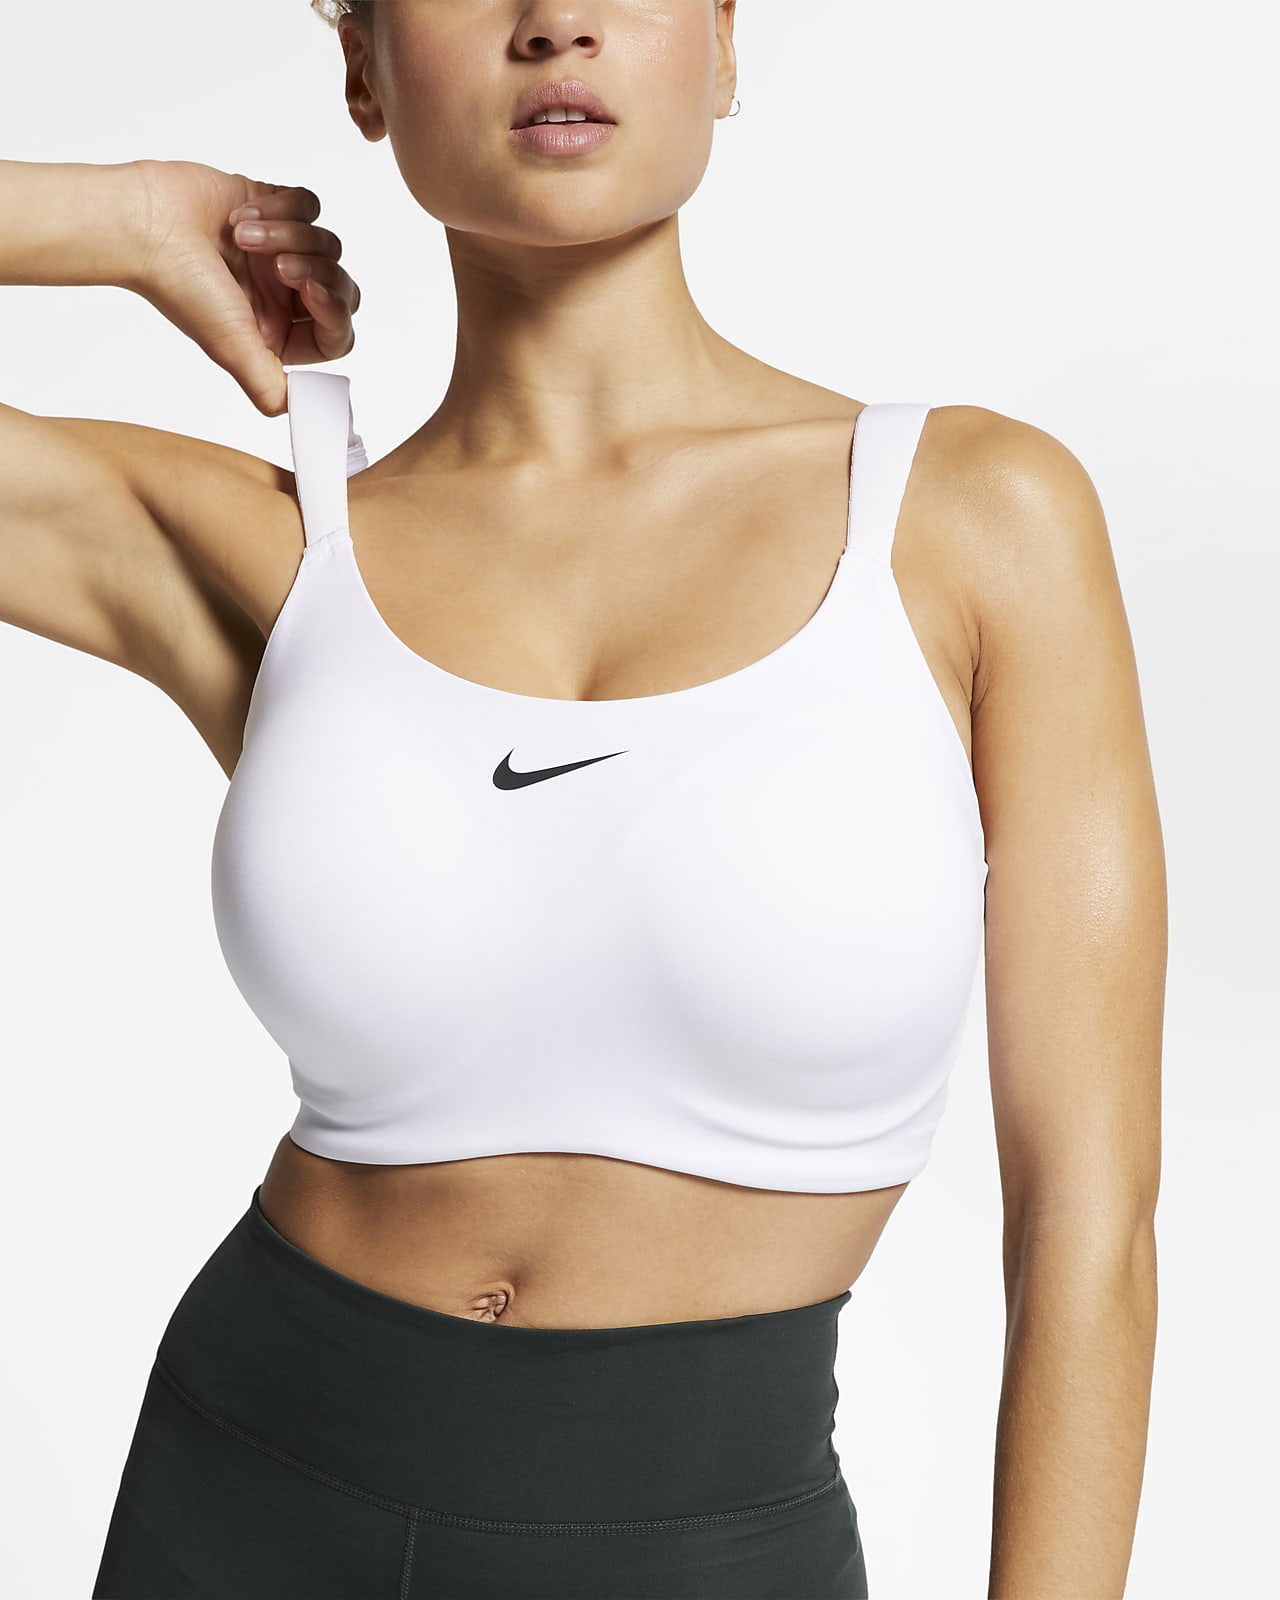 Plus Size Women Sports Bra Full Bra Cup Tops Ultra-thin Large Yoga Bra Tops Vest 